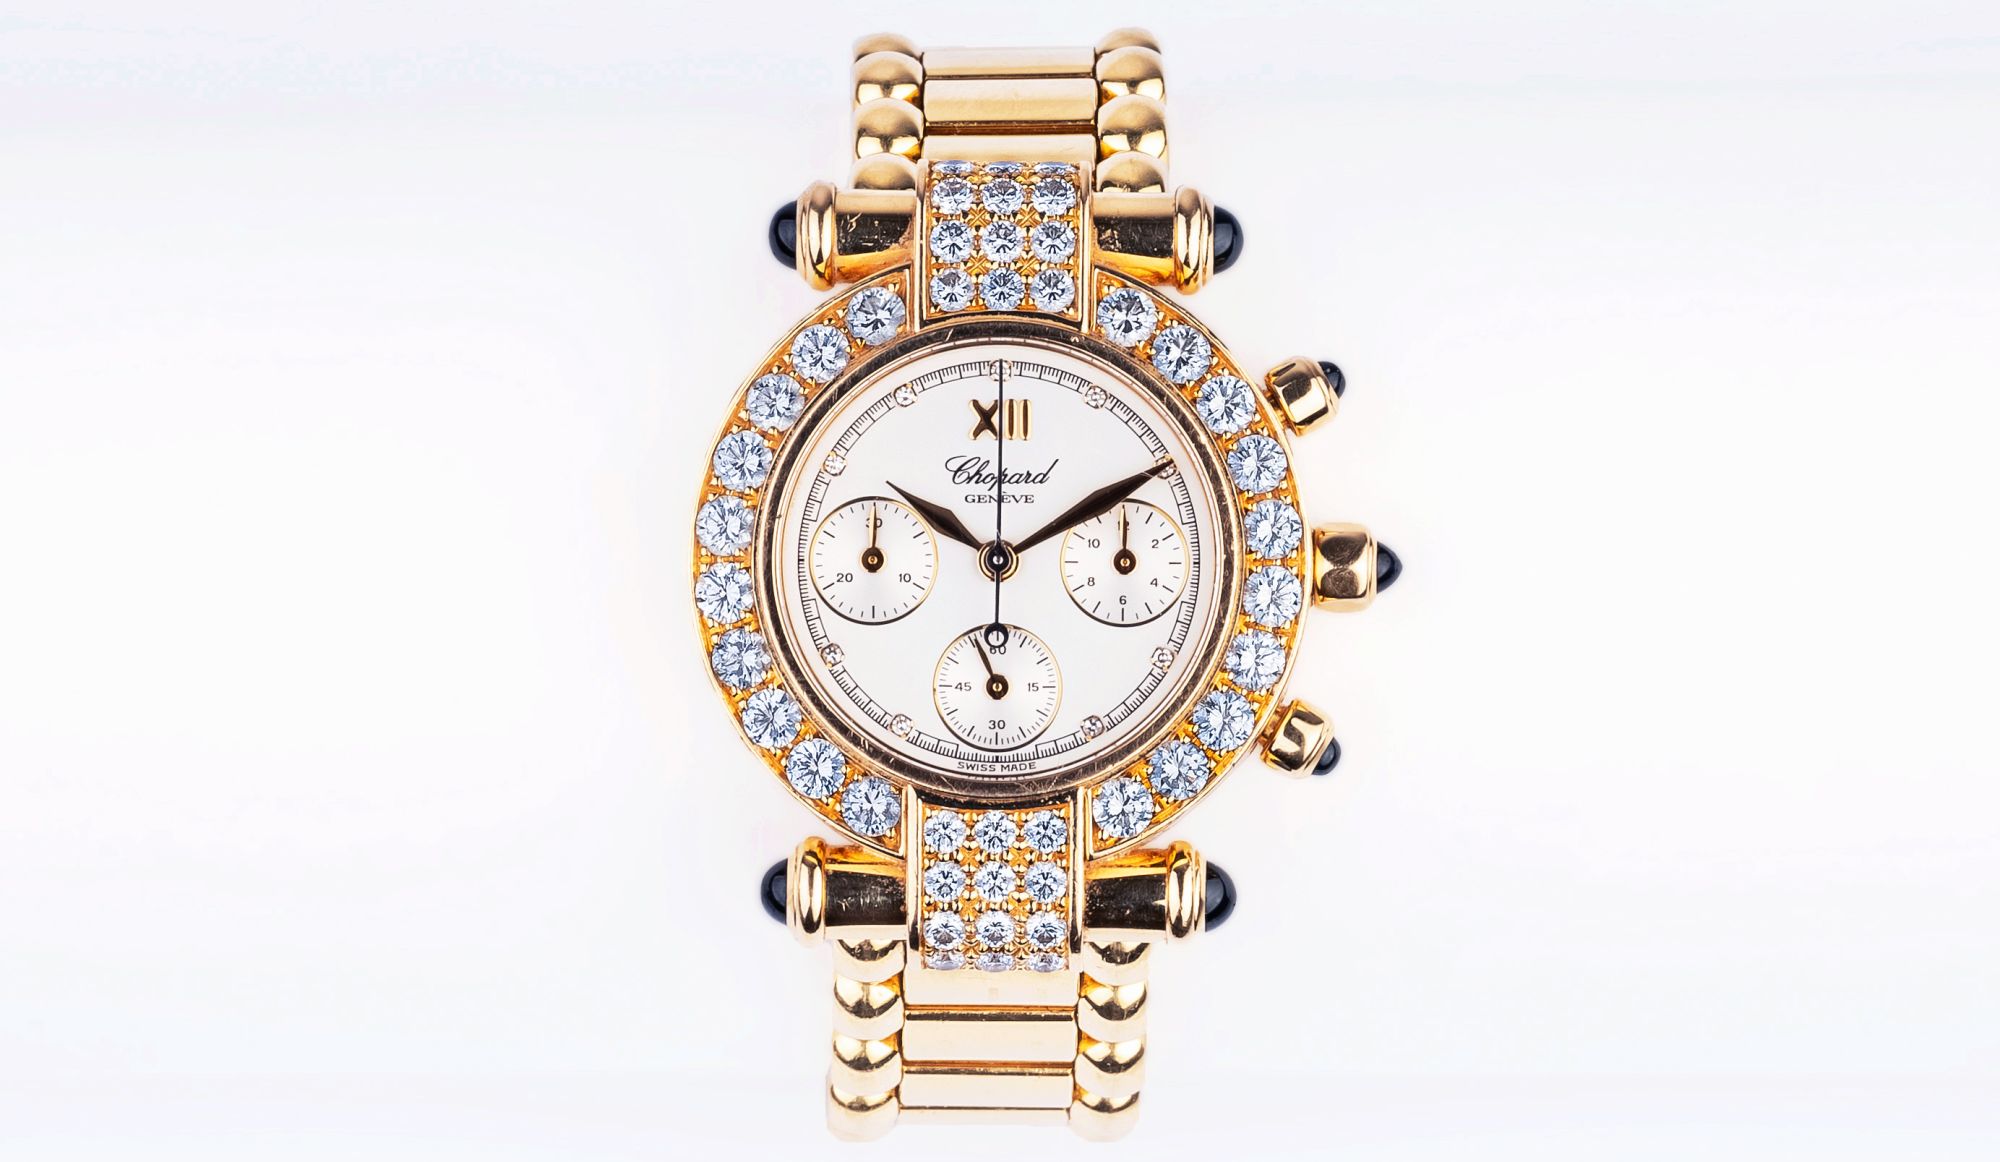 Damen-Armbanduhr Imperiale Chronograph mit Brillanten